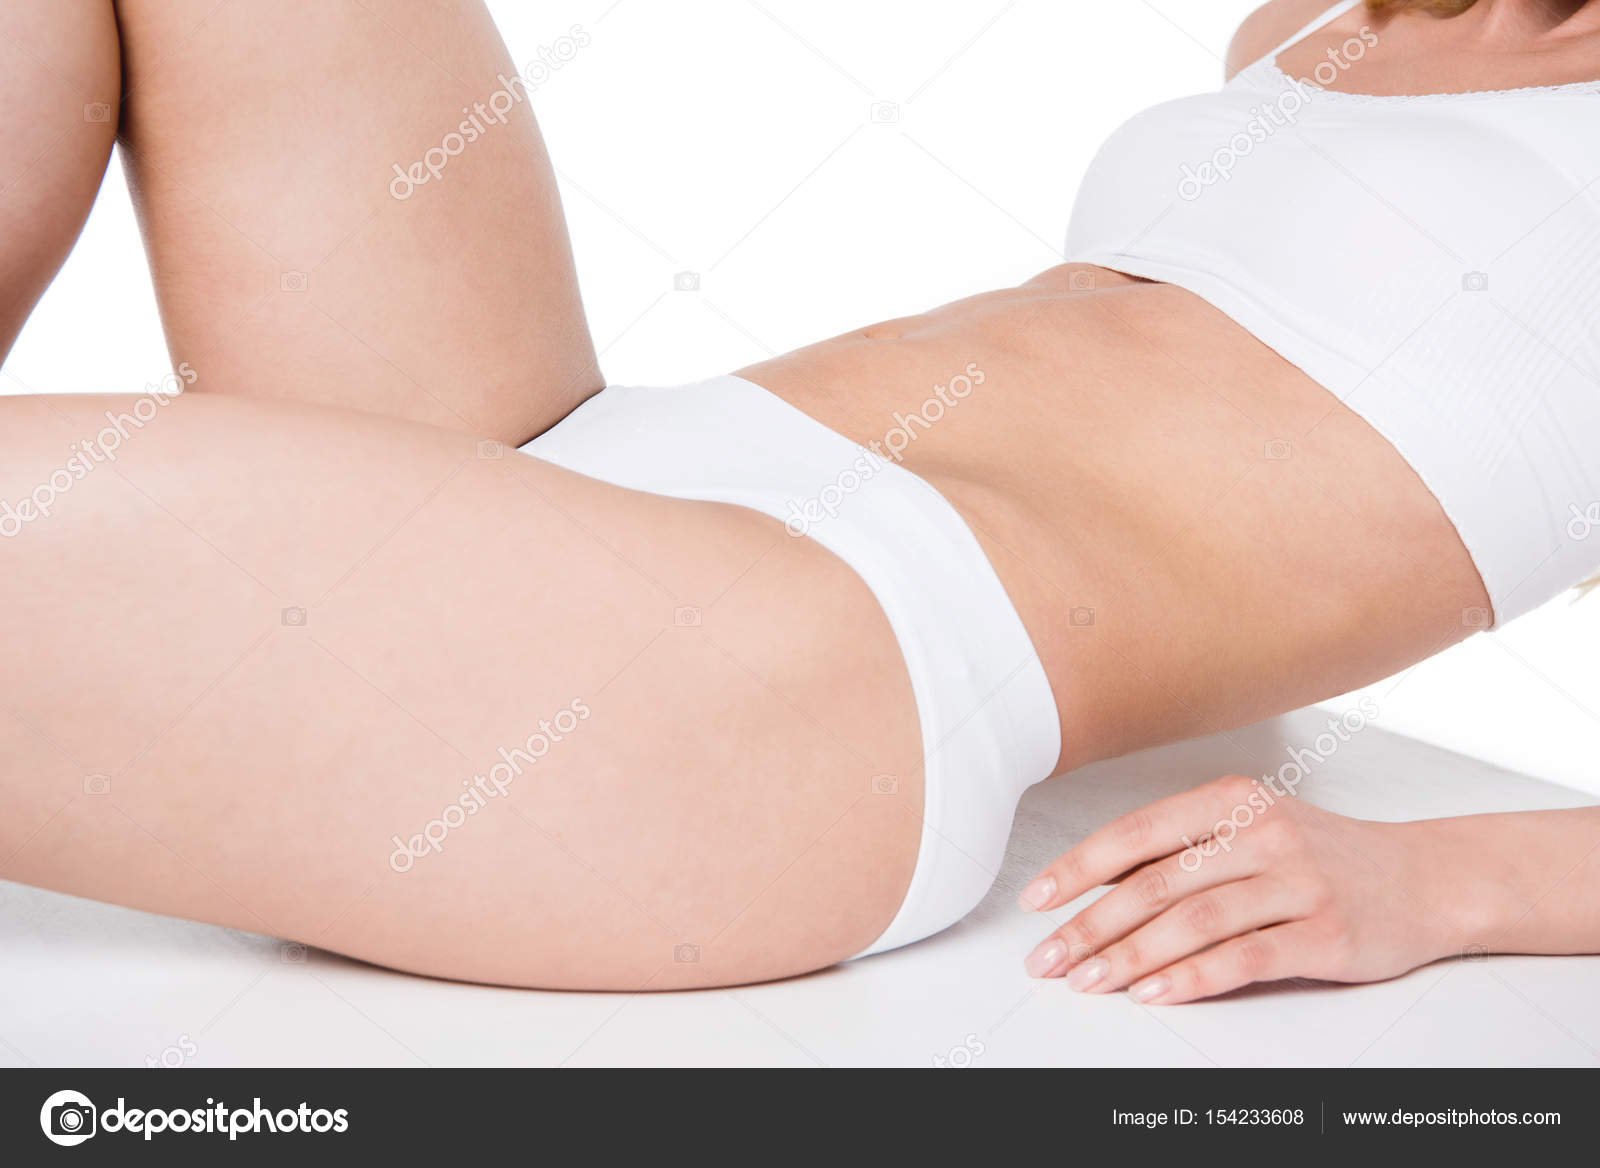 https://st3.depositphotos.com/9881890/15423/i/1600/depositphotos_154233608-stock-photo-young-girl-in-white-underwear.jpg